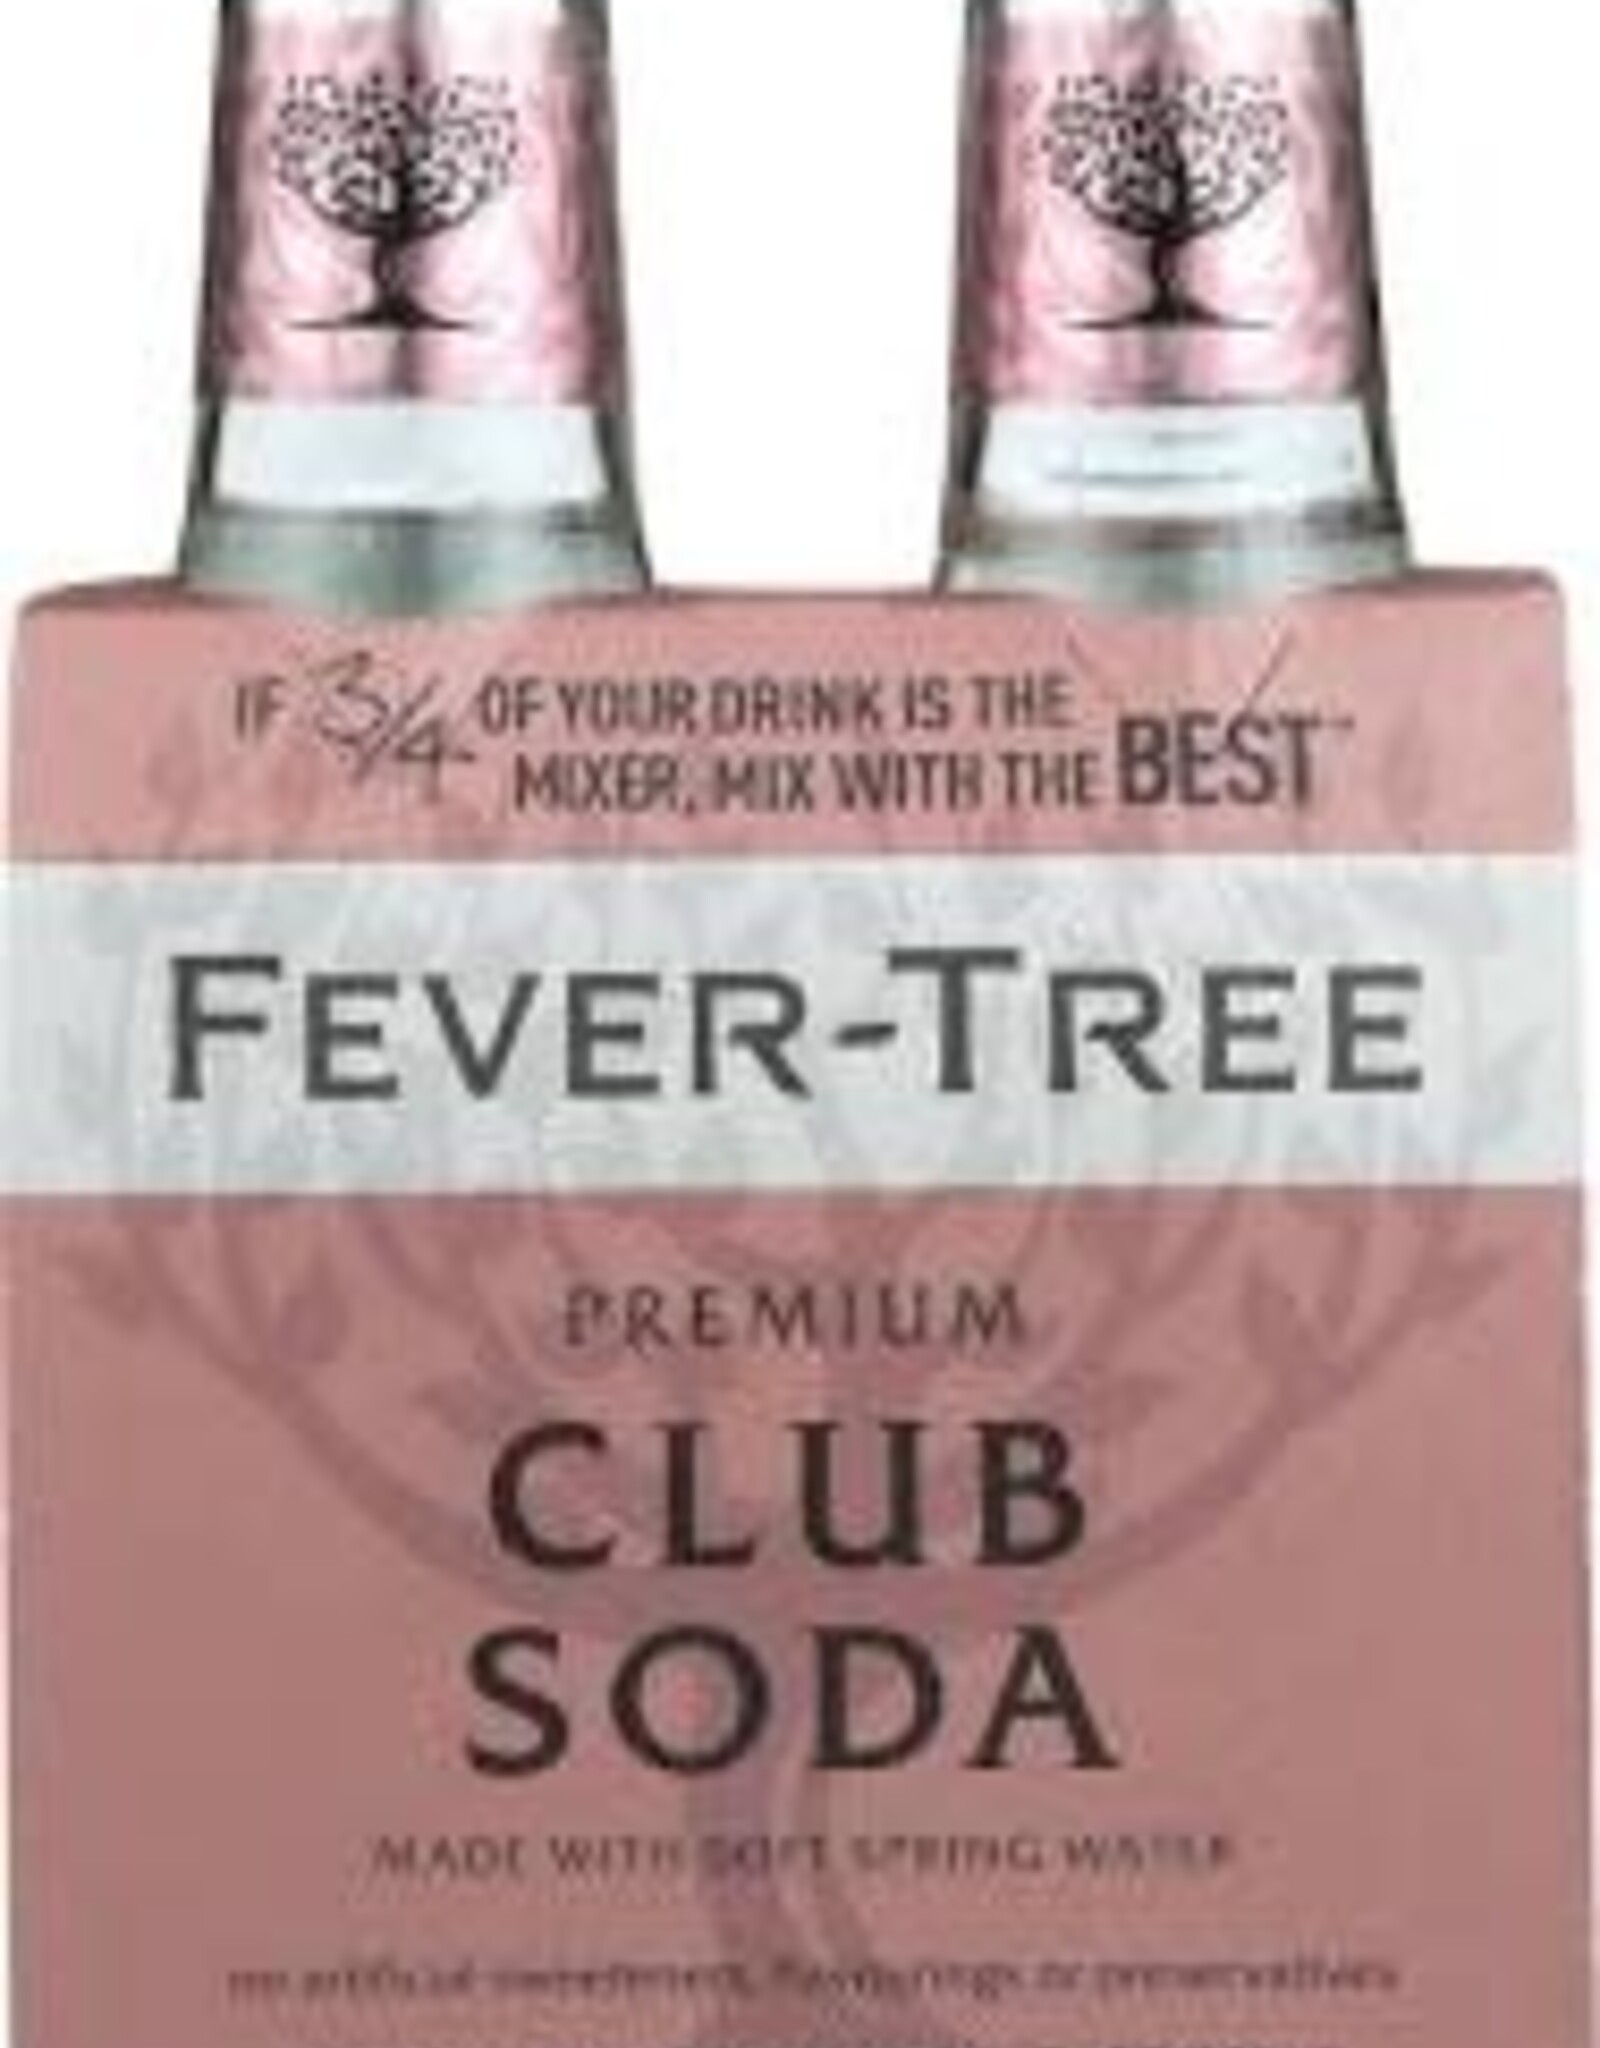 Fever-Tree Fever Tree Club Soda